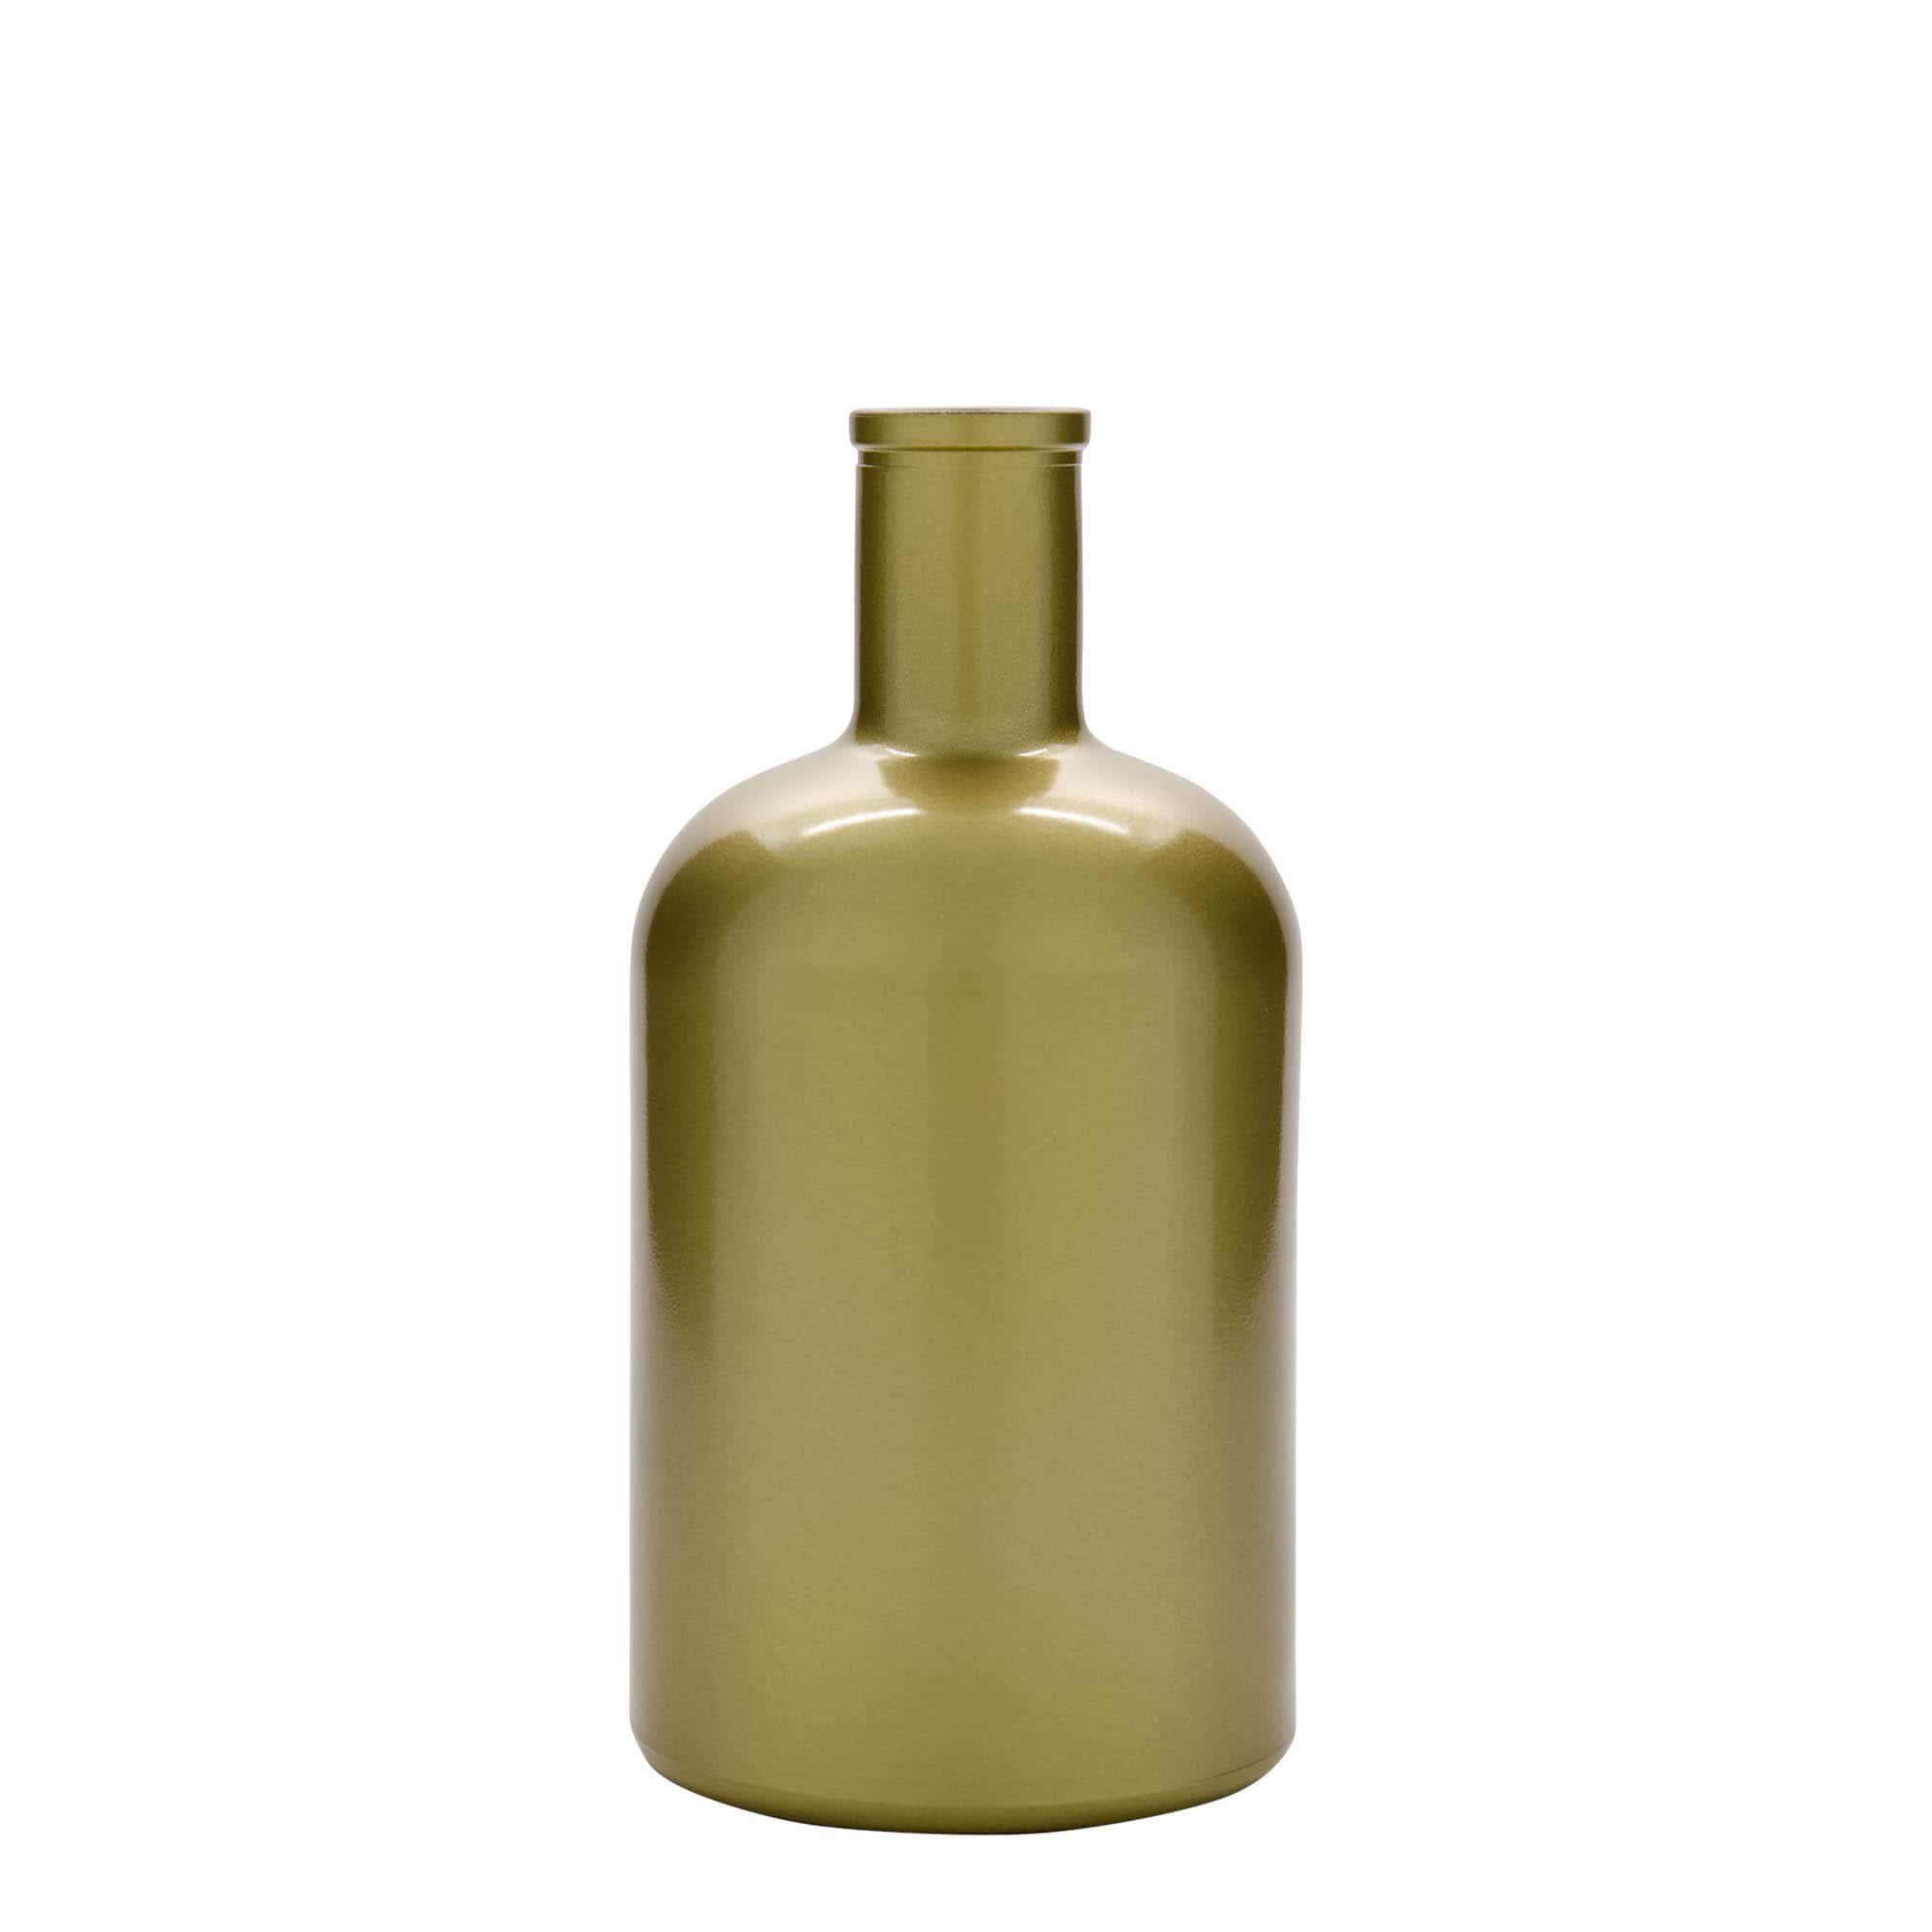 700 ml glass bottle 'Gerardino', gold, closure: cork